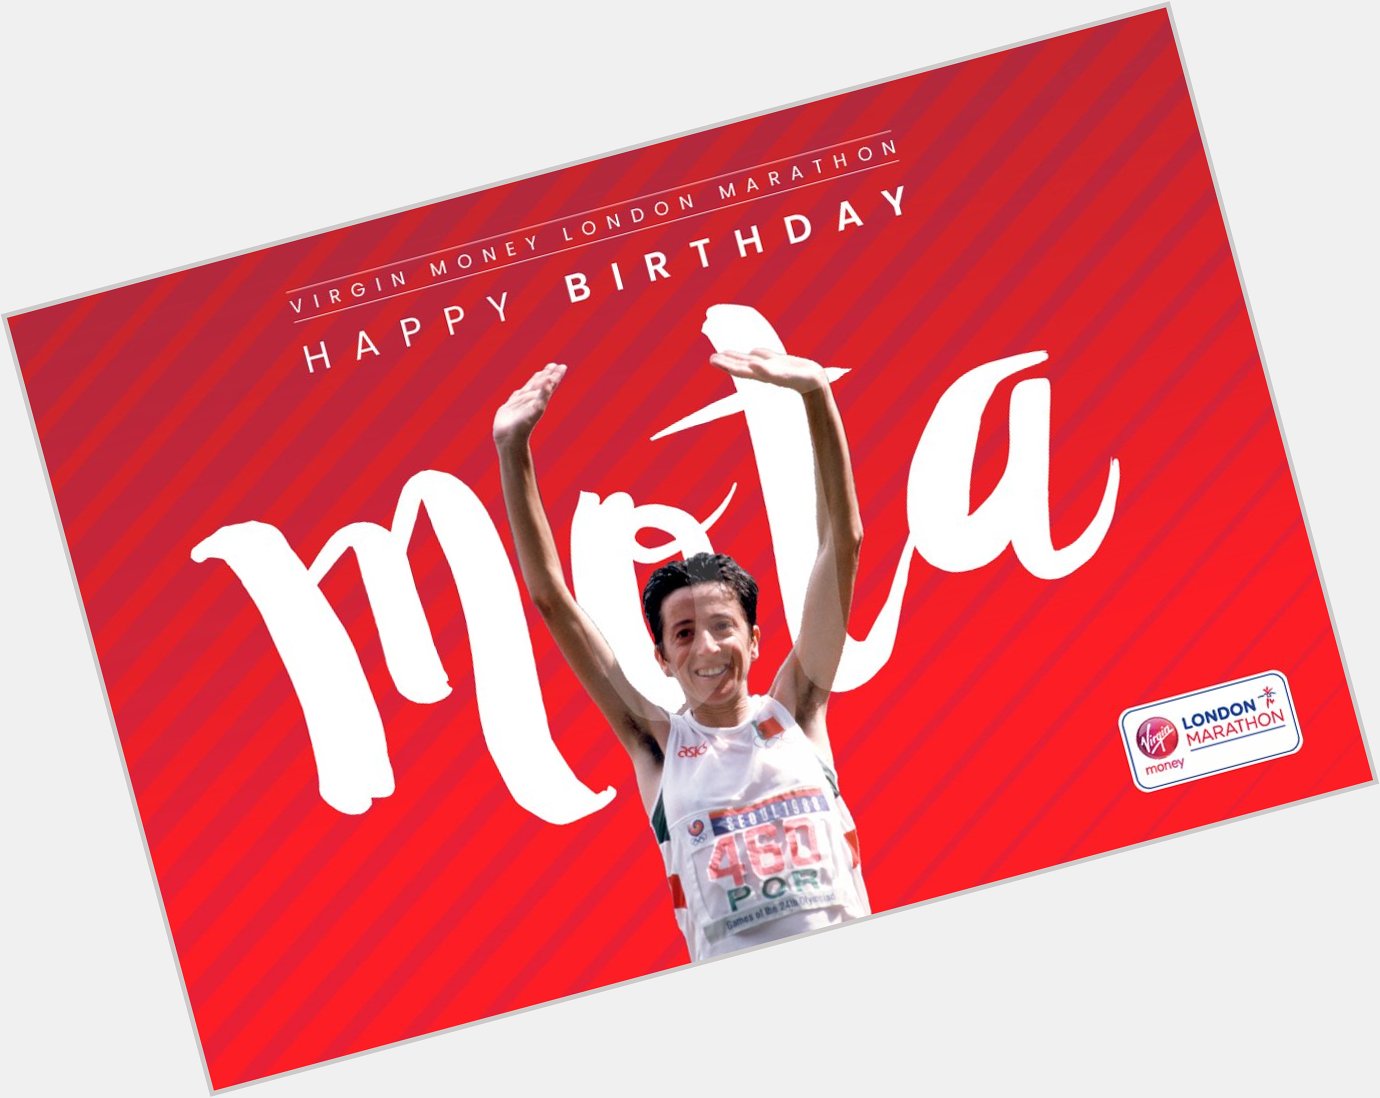  Happy 61st birthday to Rosa Mota  Winner of the 1991 London Marathon.   